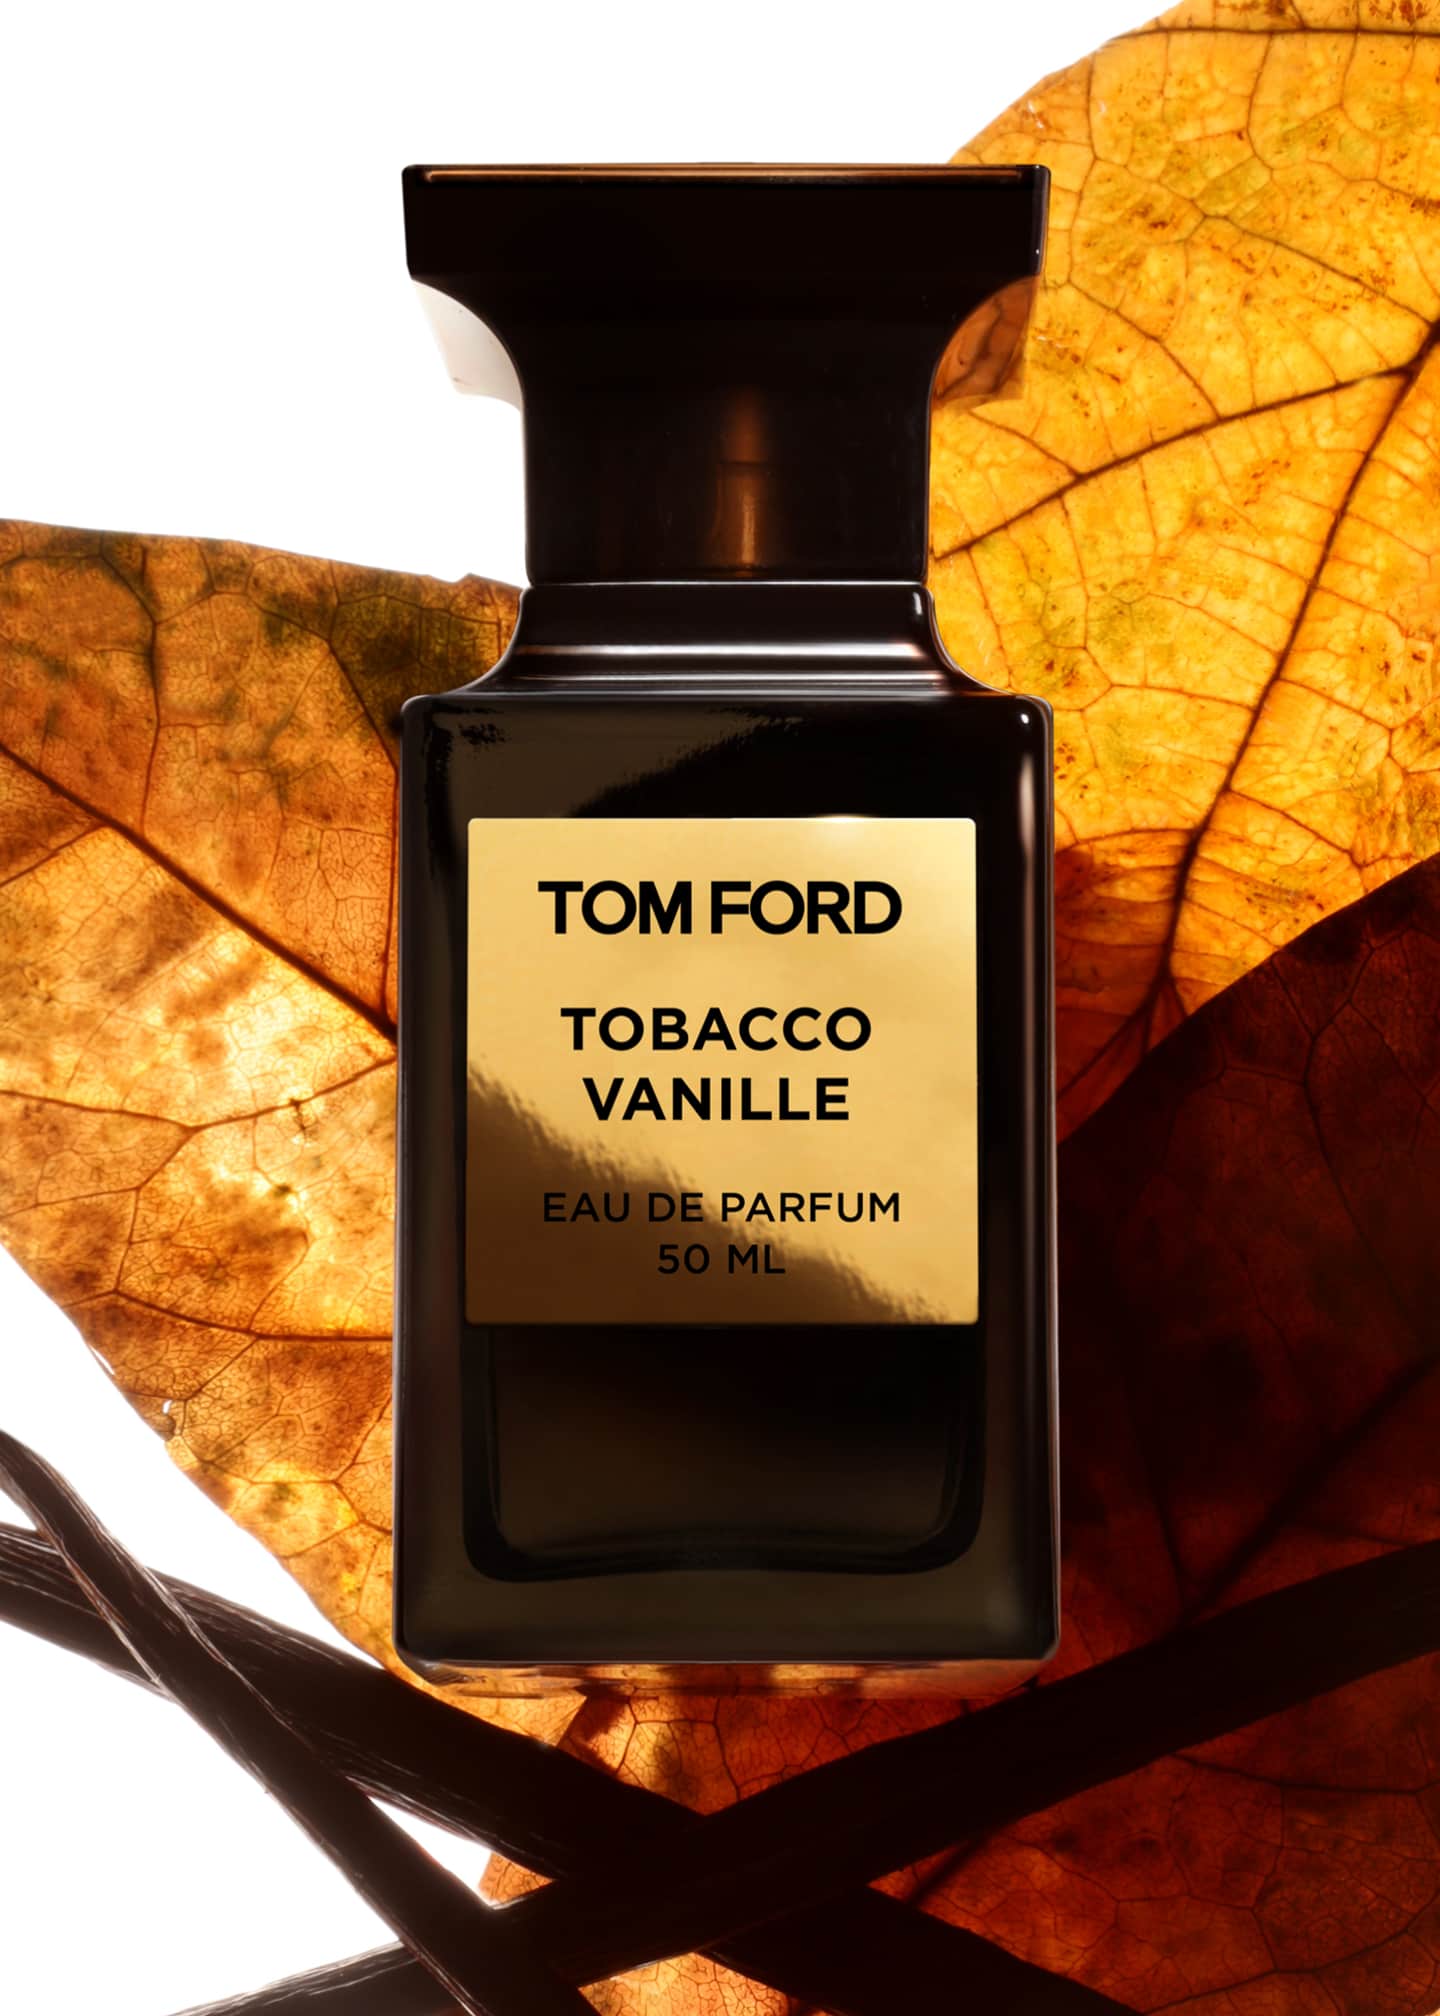 Tobacco Vanille Eau de Parfum Fragrance - TOM FORD